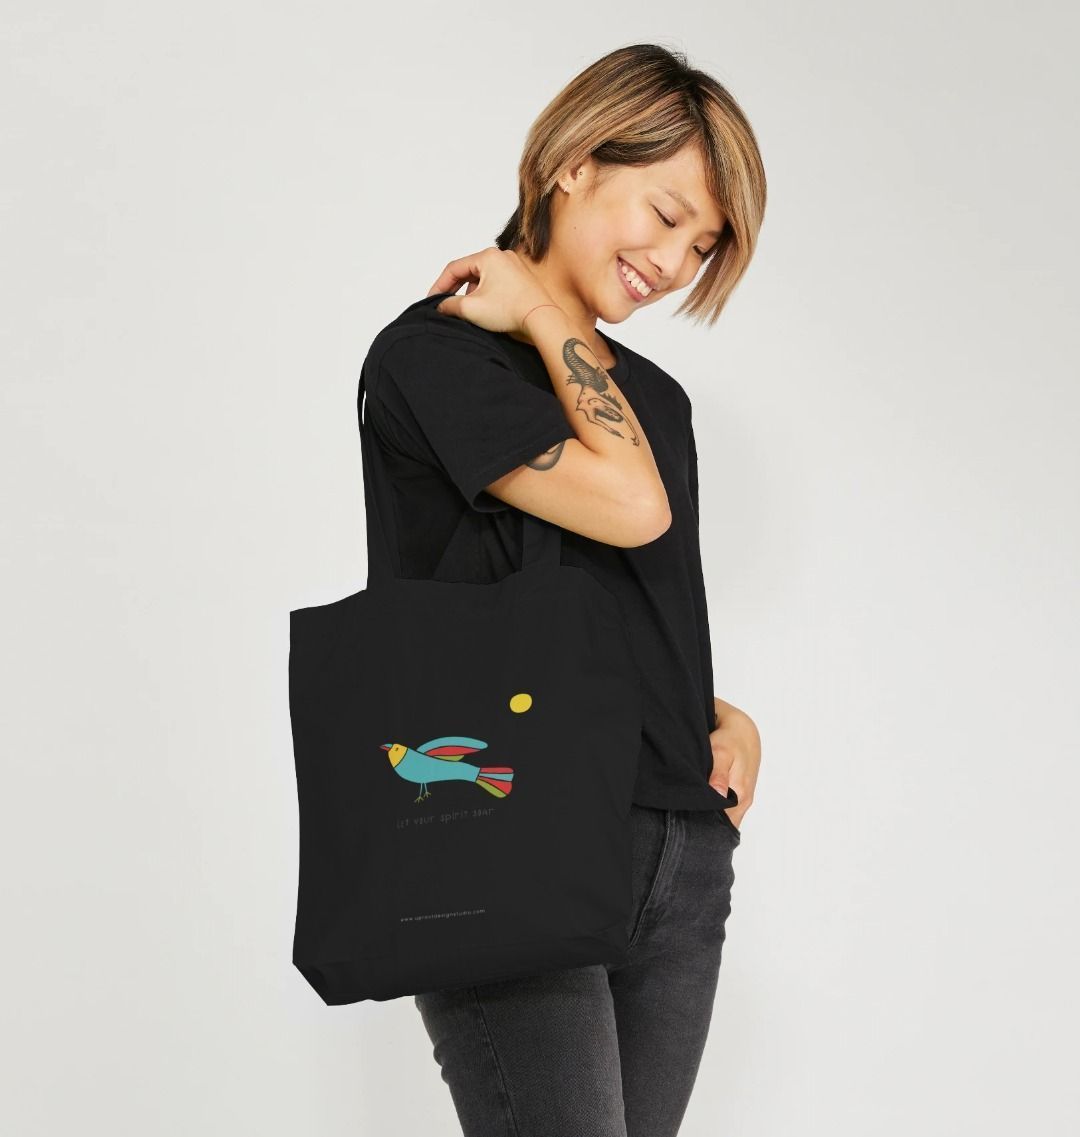 "Let Your Spirit Soar" Tote Bag with Colorful Folk Art Bird & Sun